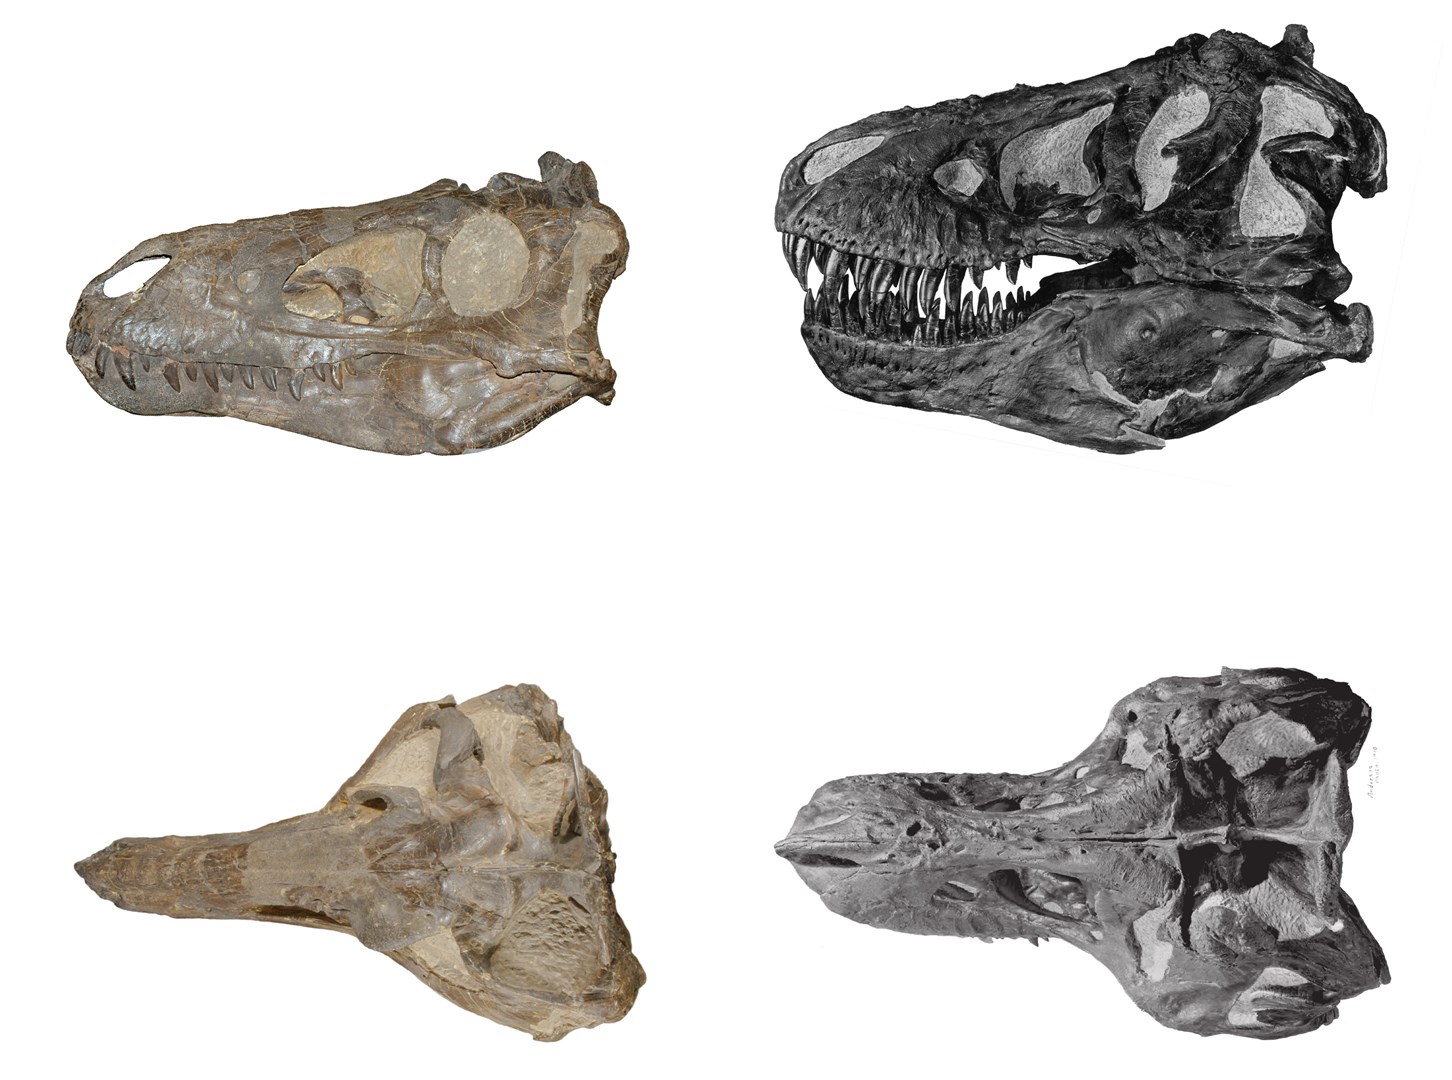 A comparison of Nanotyrannus and Tyrannosaurus skulls (Longrich et al/ Fossil Studies)